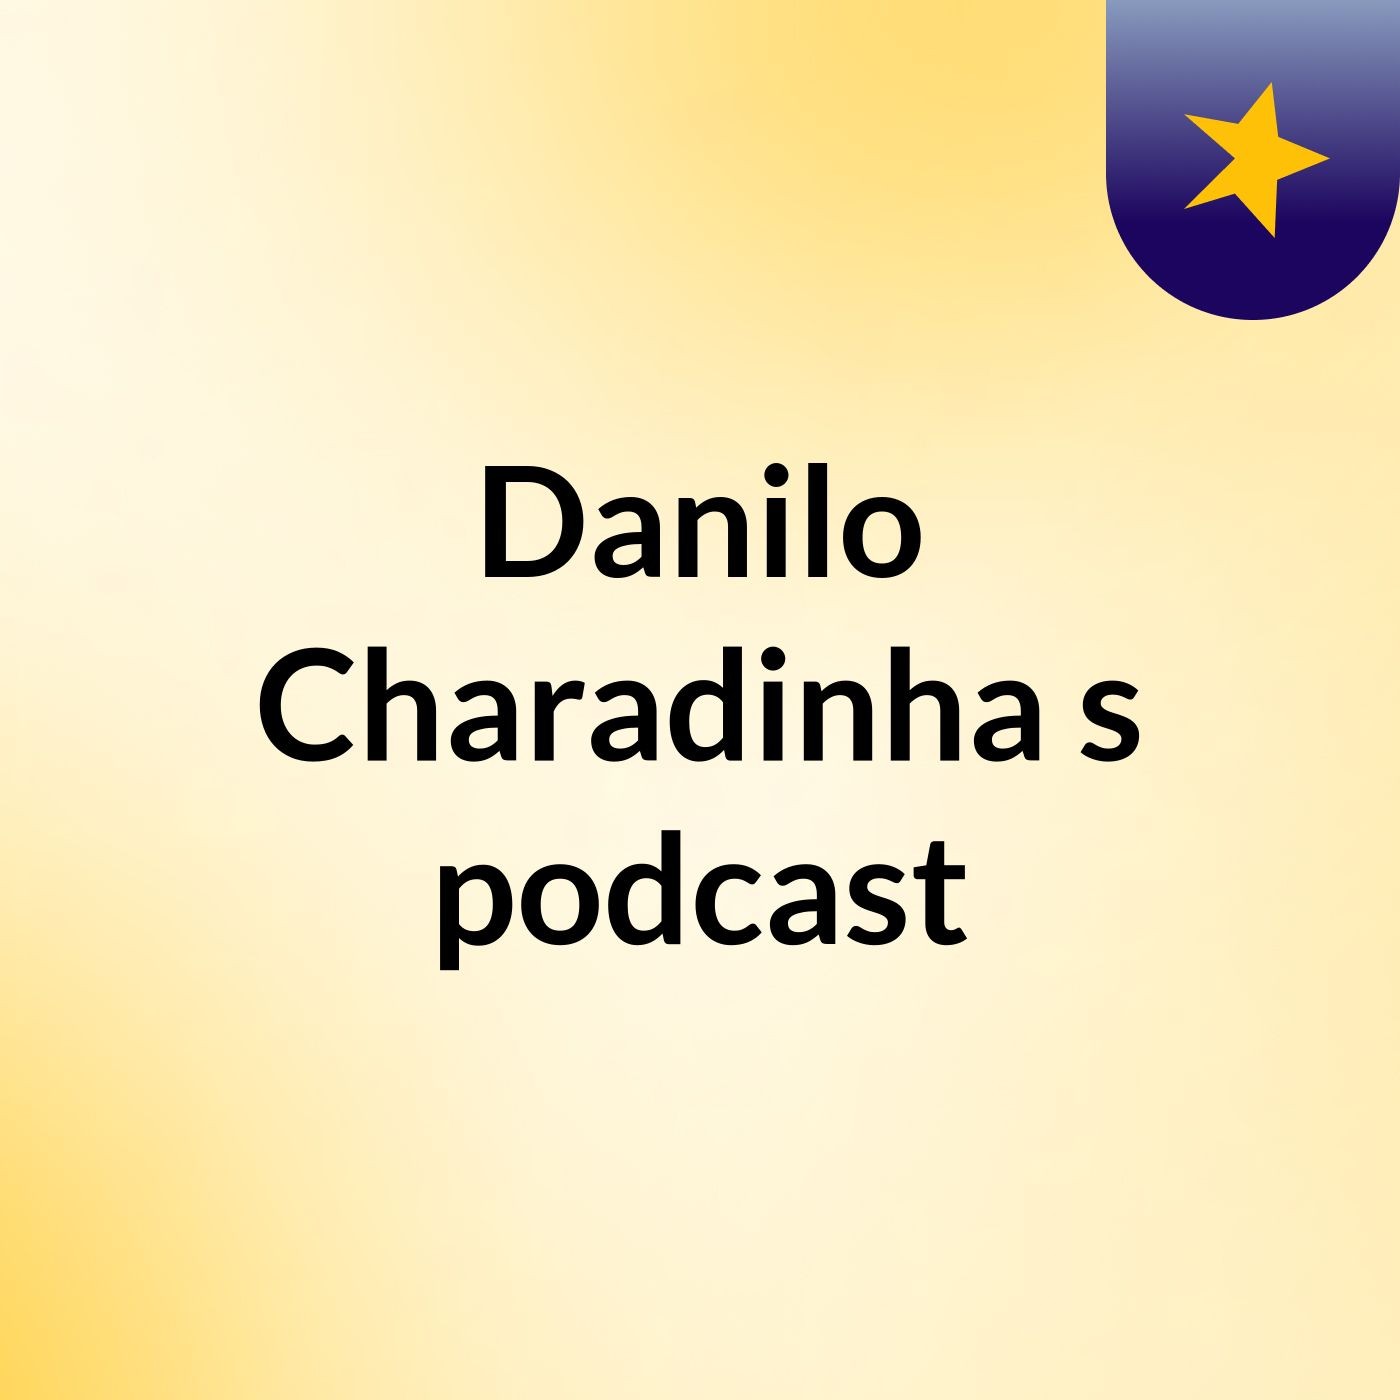 Danilo Charadinha's podcast